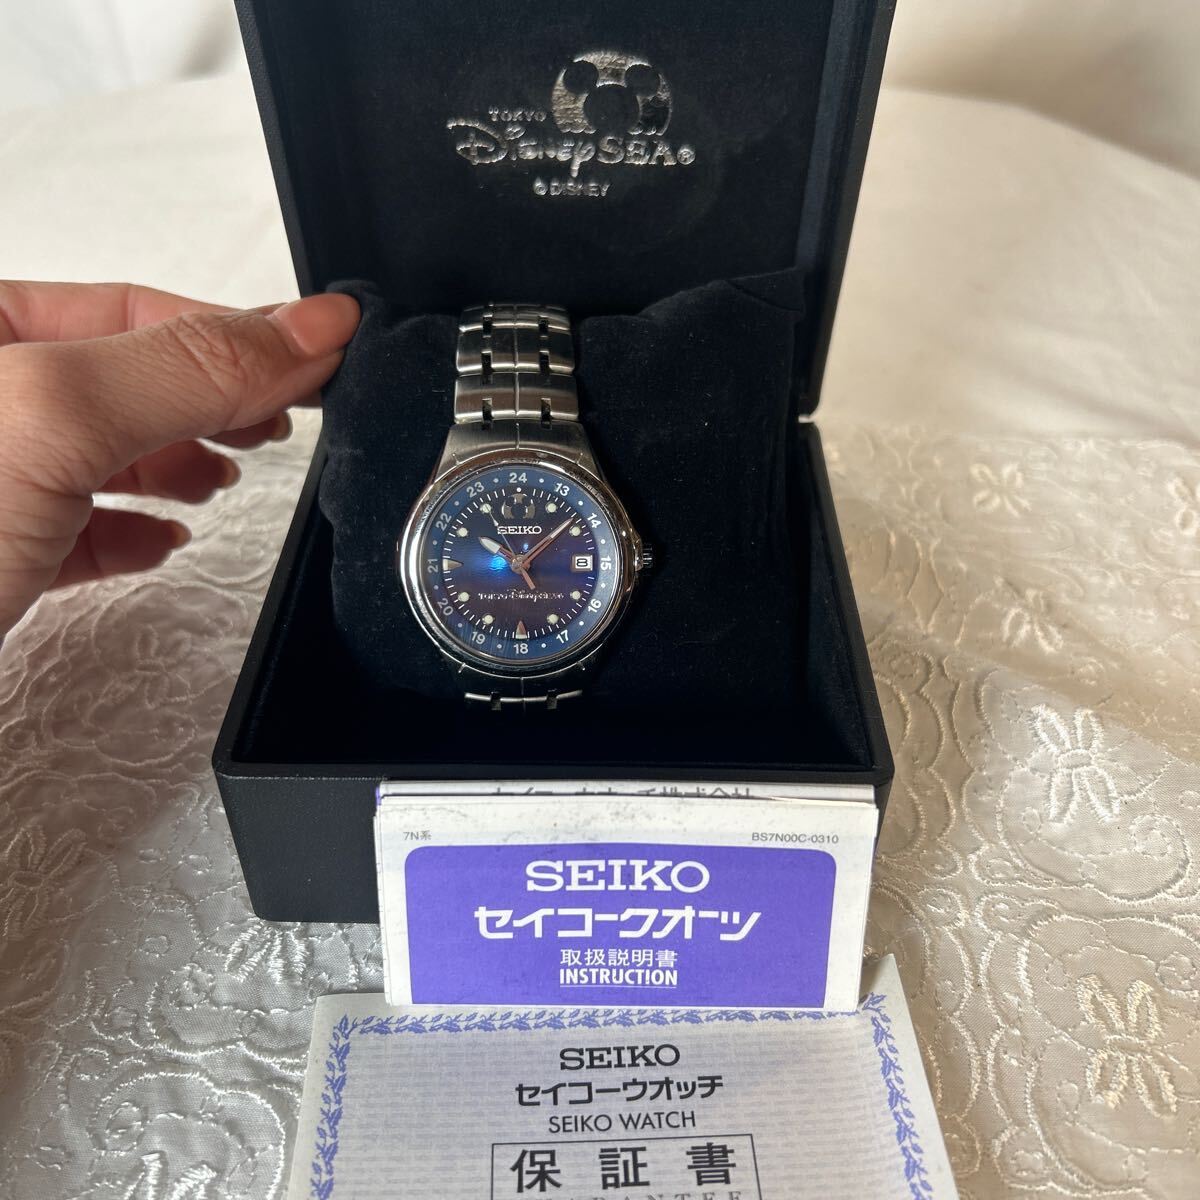 【#tn】【不動】SEIKO腕時計 ミッキー TOKYO Disney SEA BS7N00C-0310 シルバー ブルー セイコー_画像2